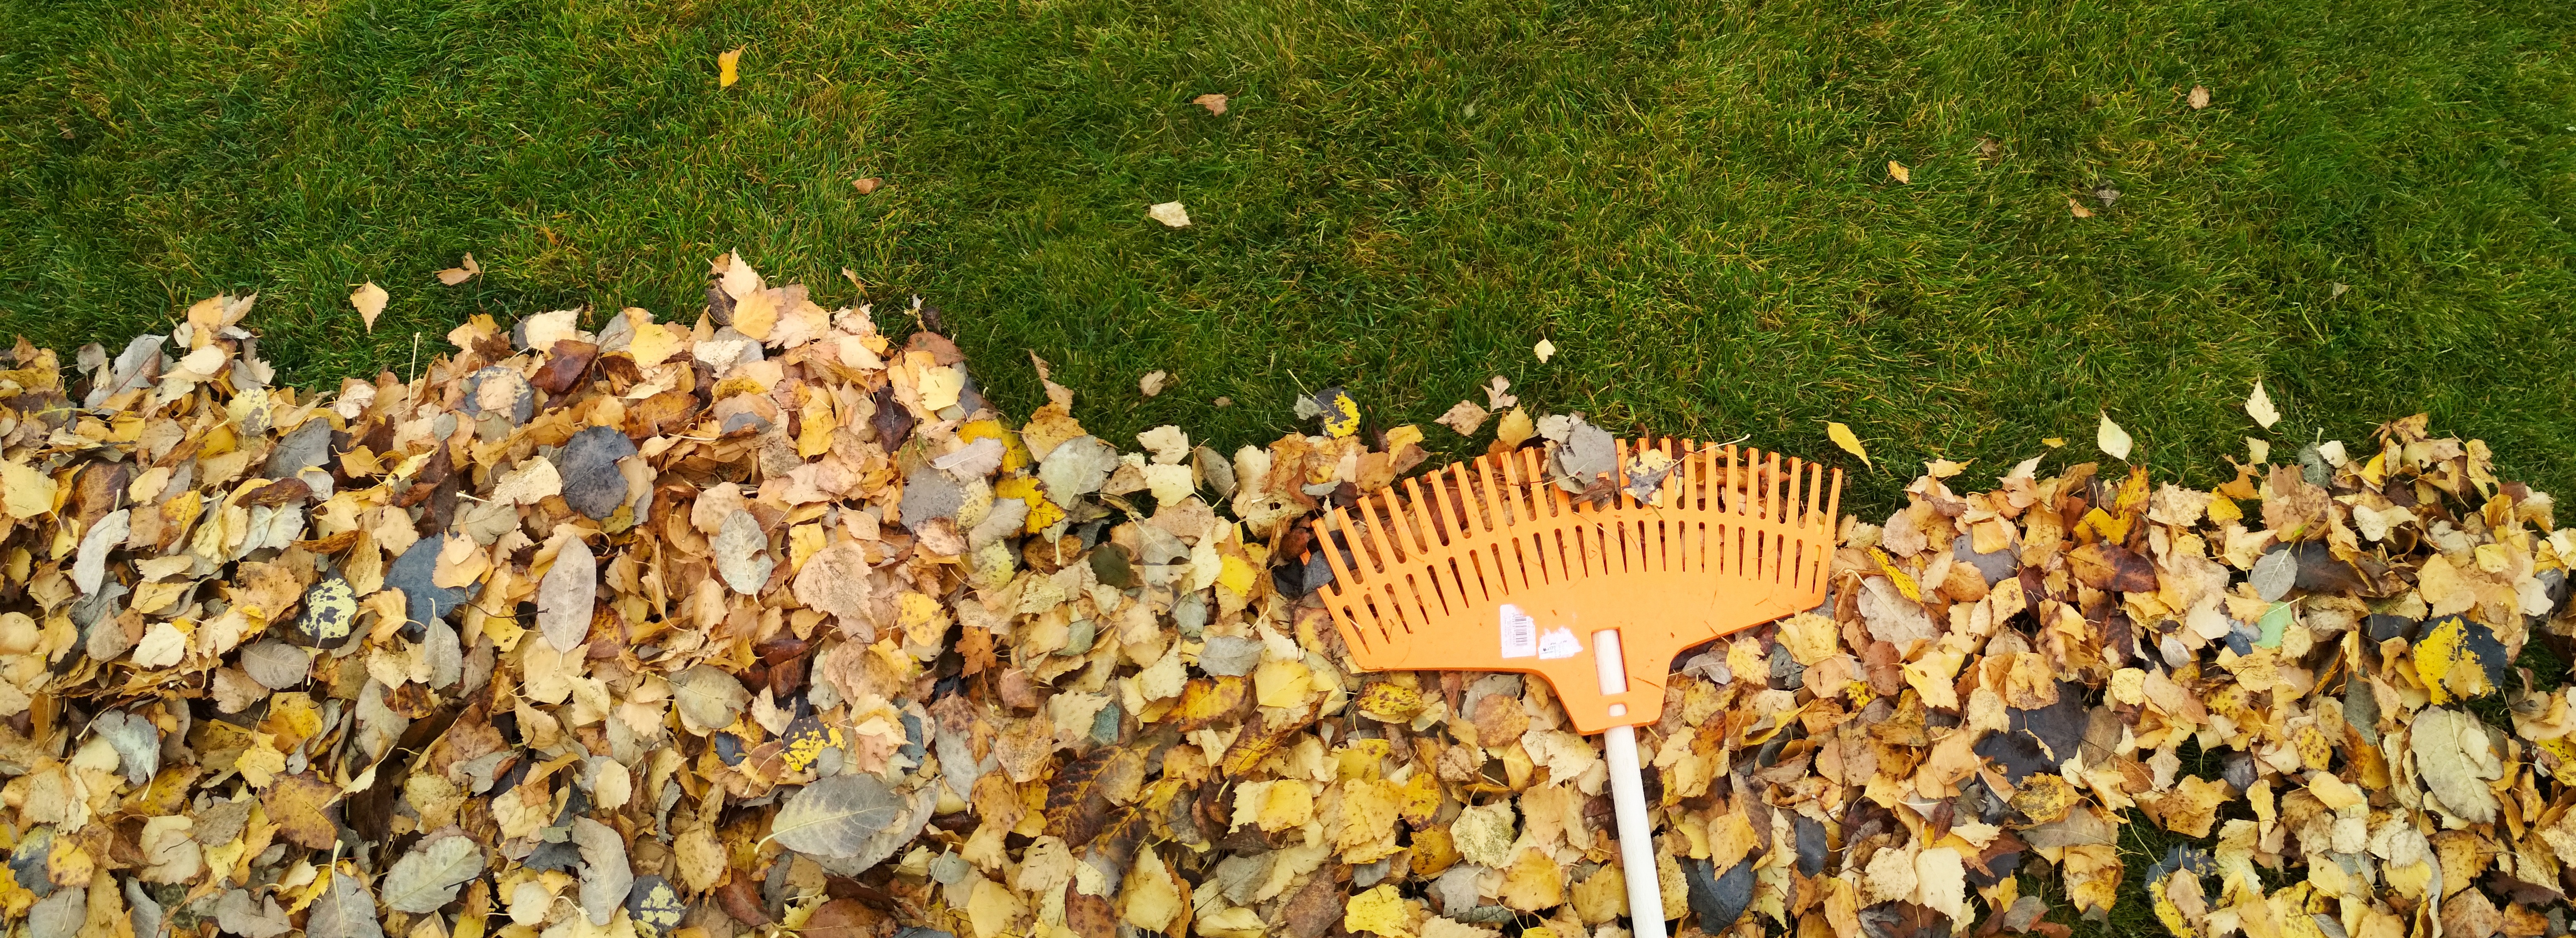 fall-clean-up-raking-leaves-1